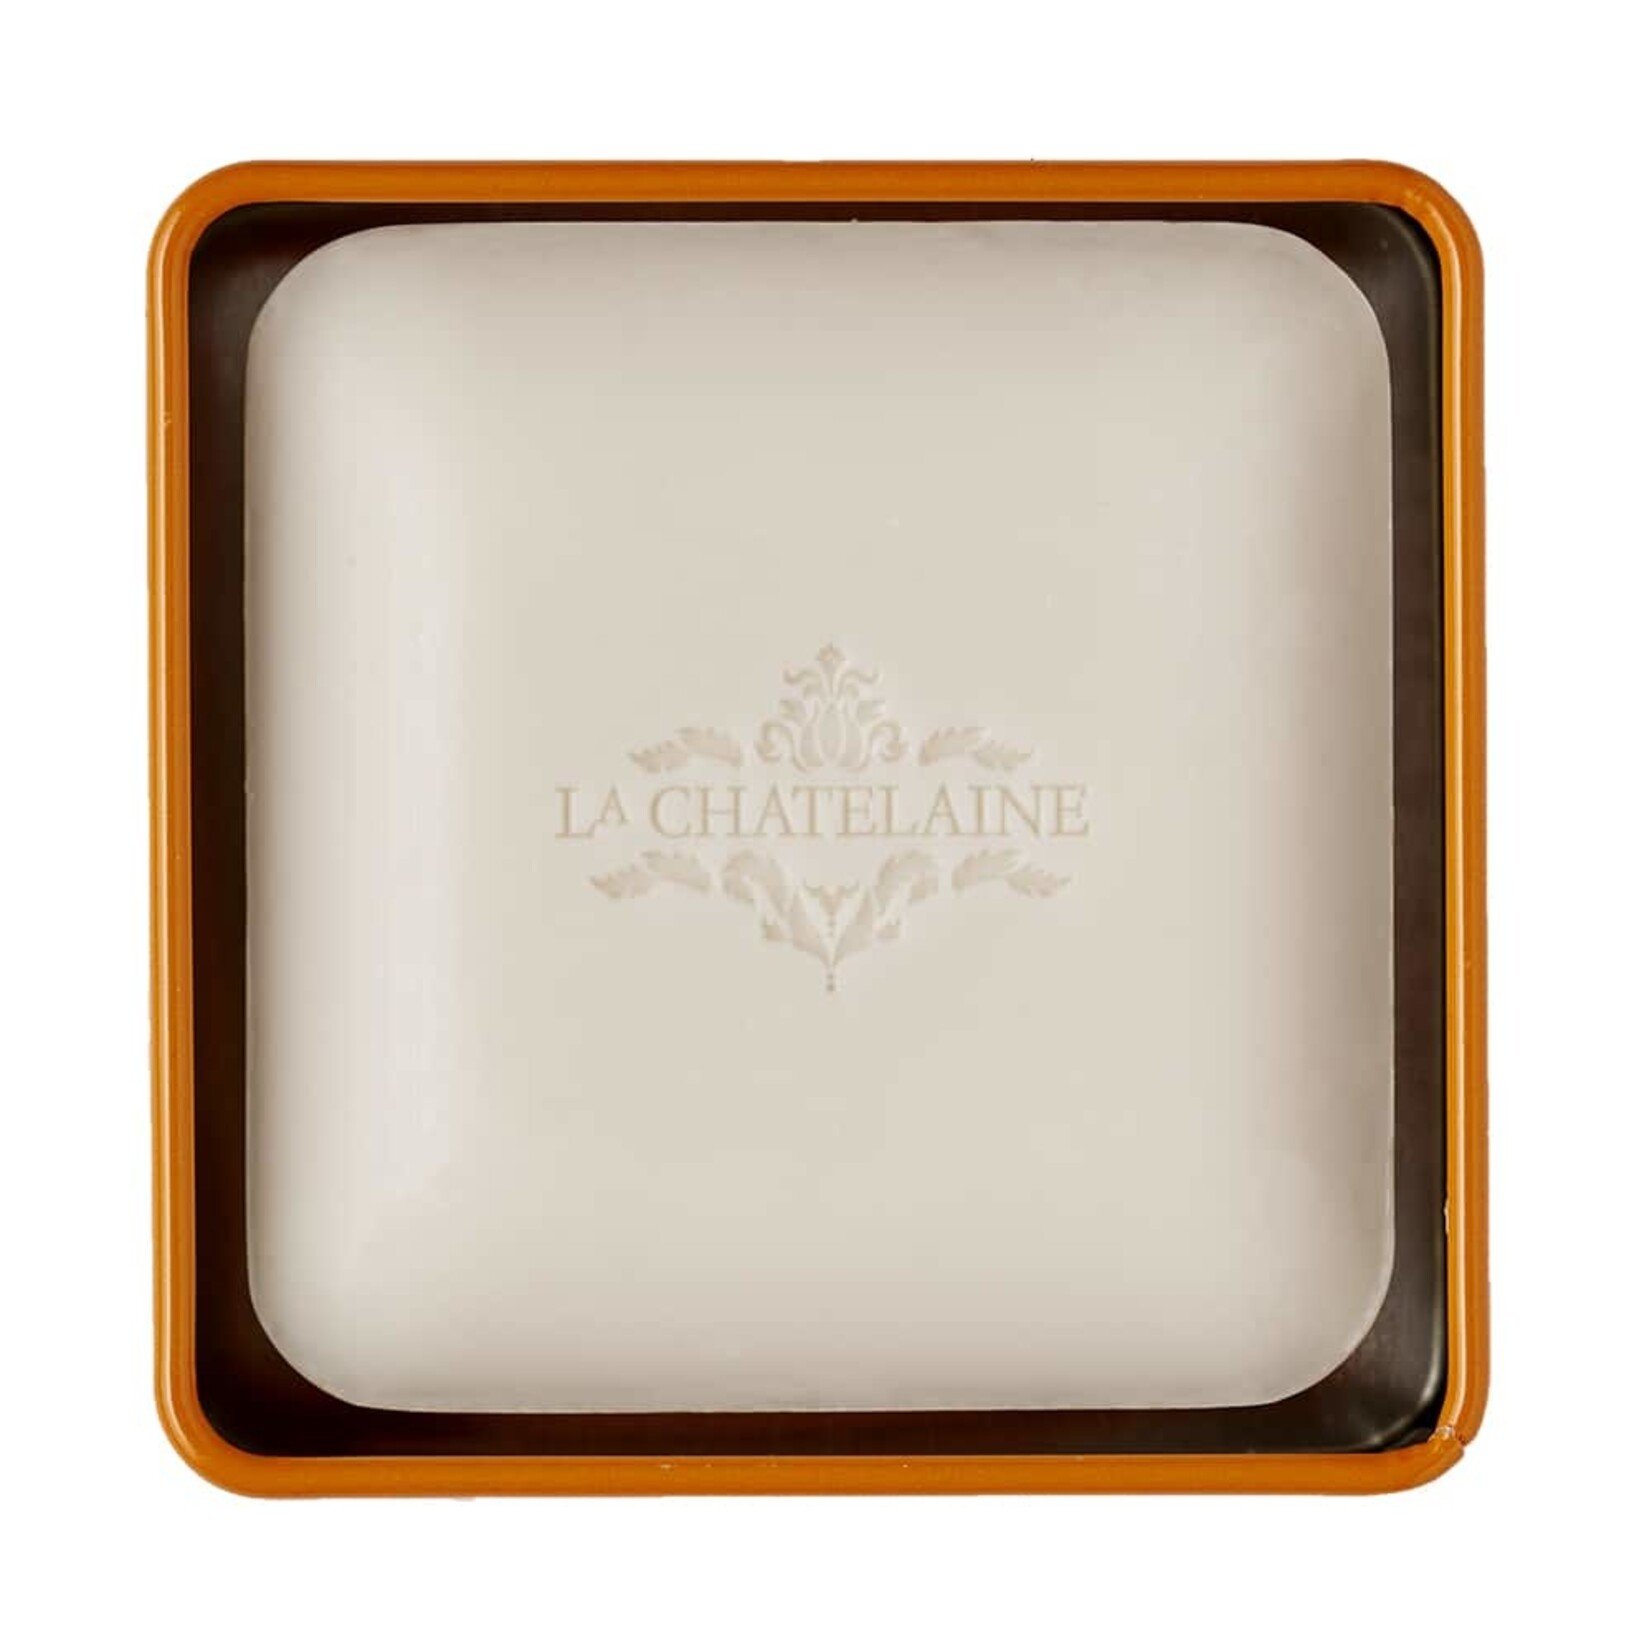 La Chatelaine Travel Soap Tin